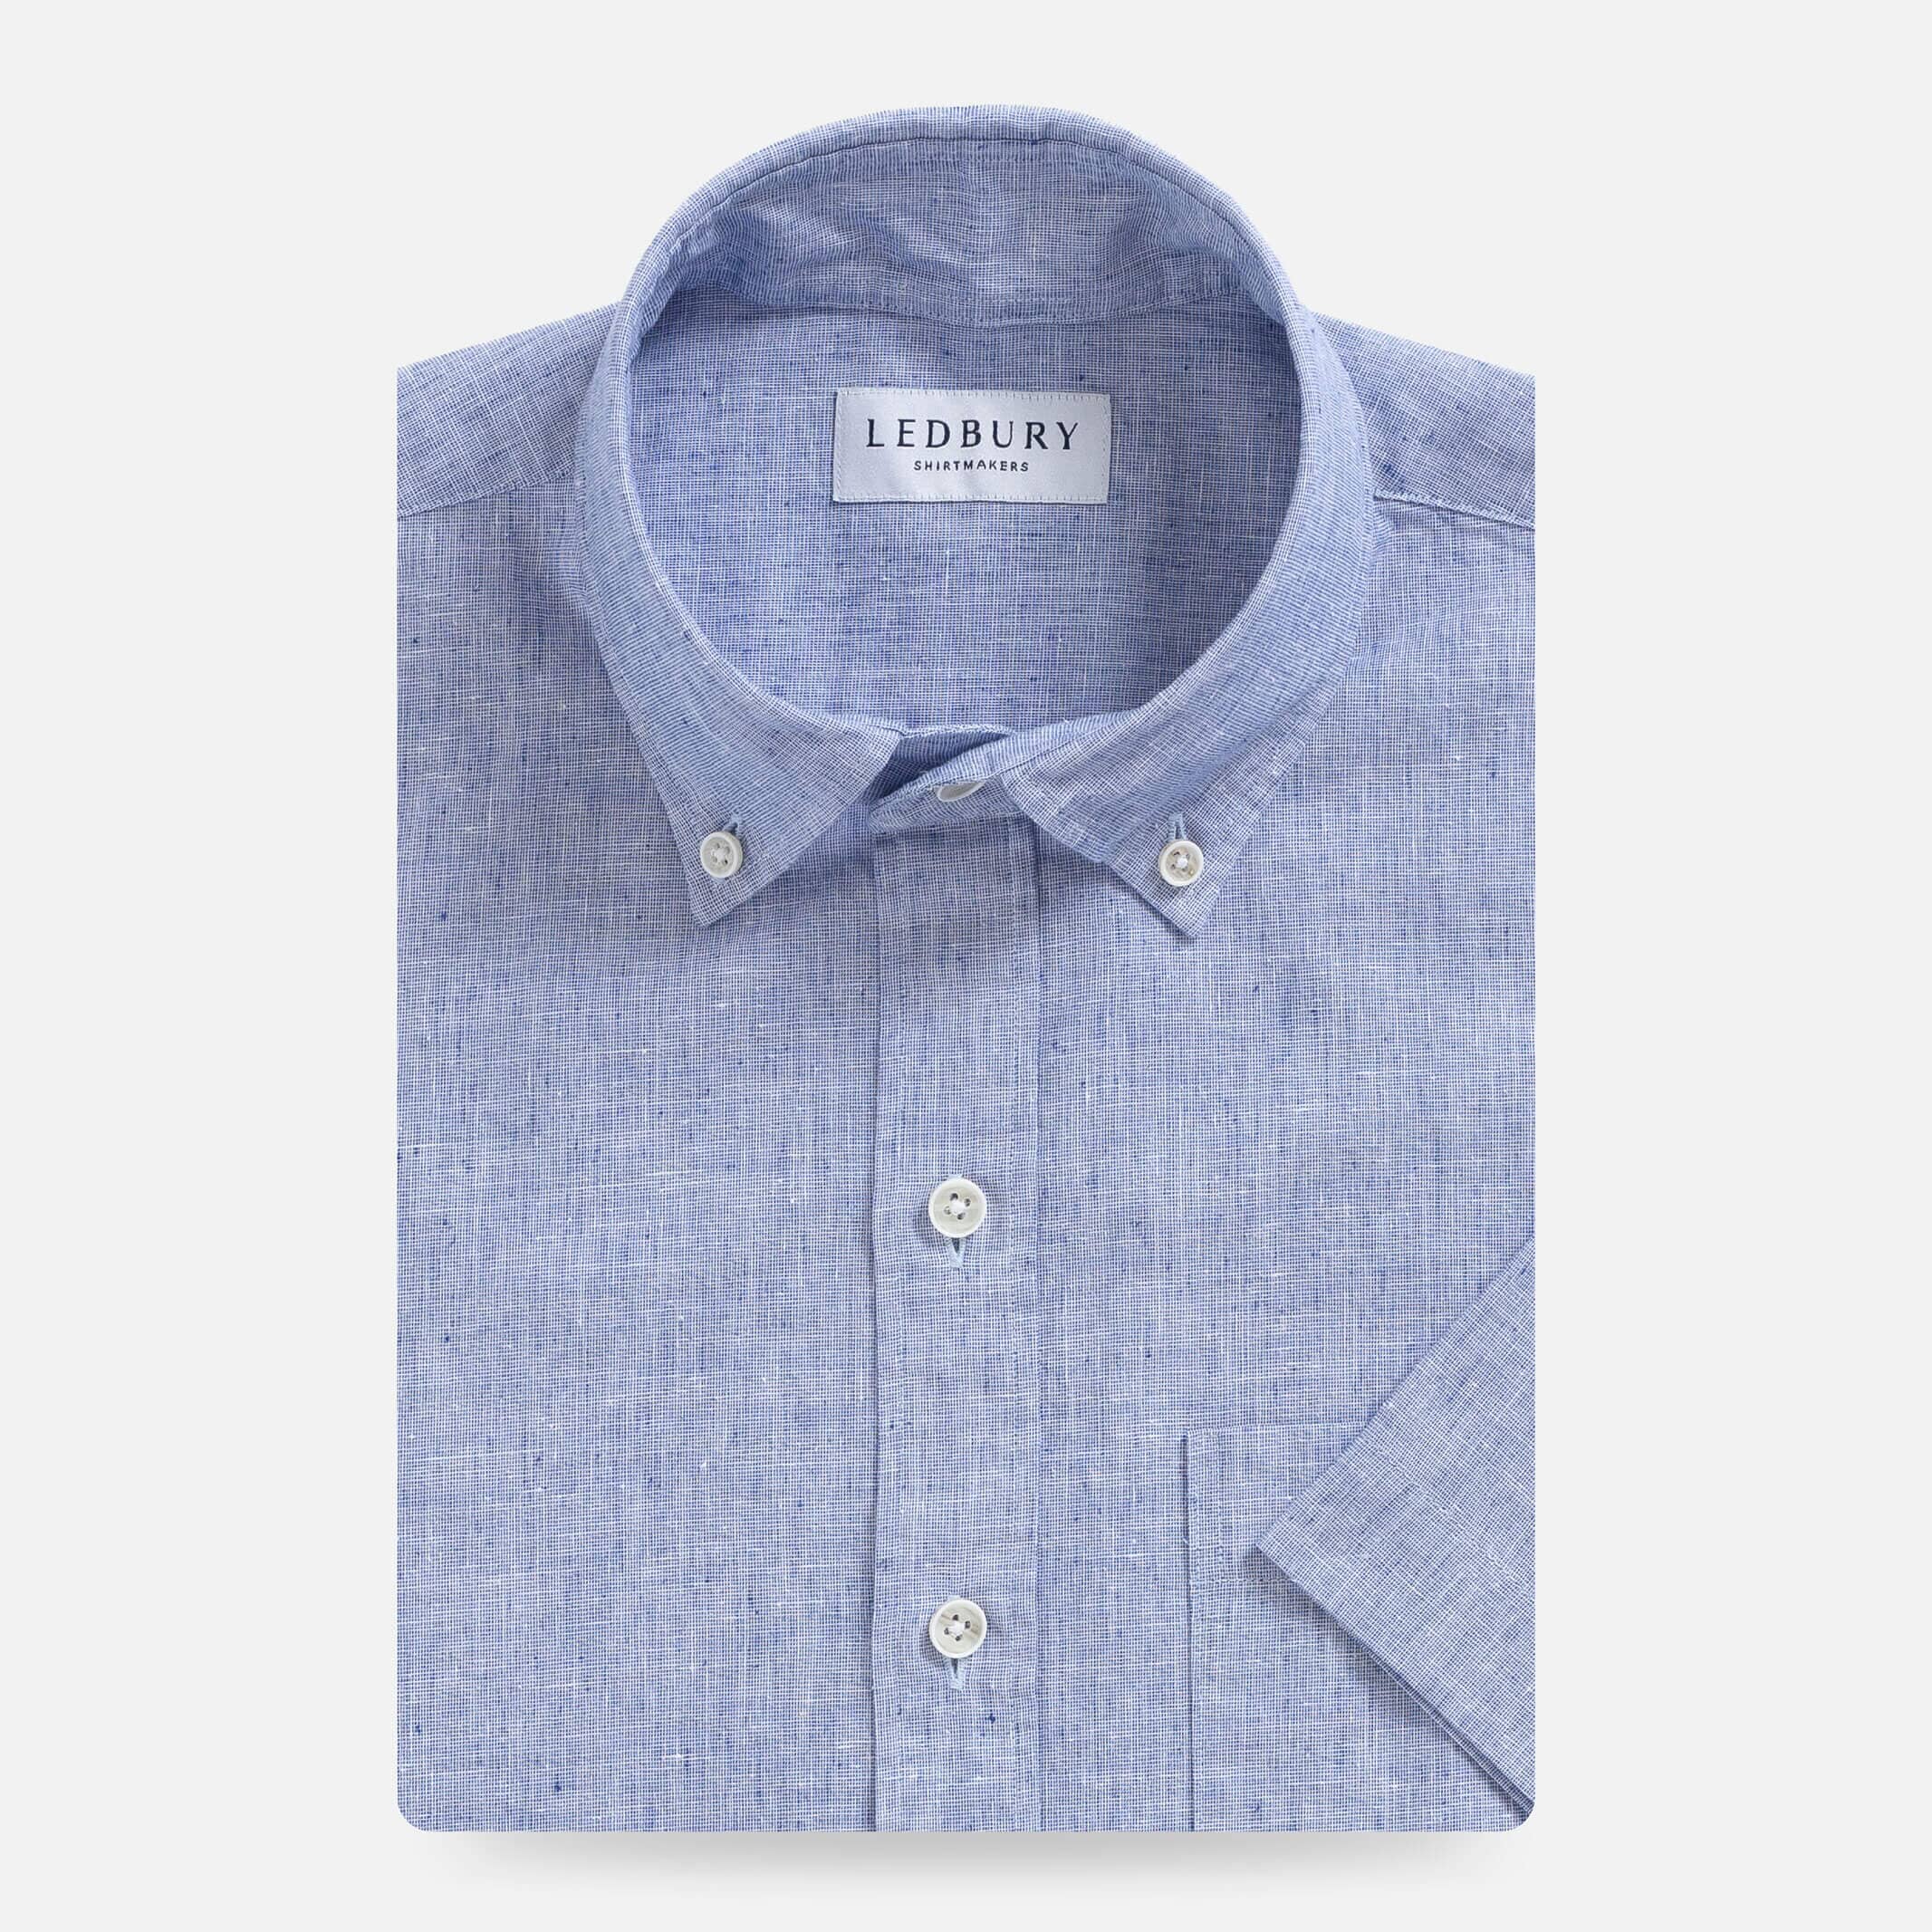 The Blue Short Sleeve Barretto Cotton Linen Custom Shirt